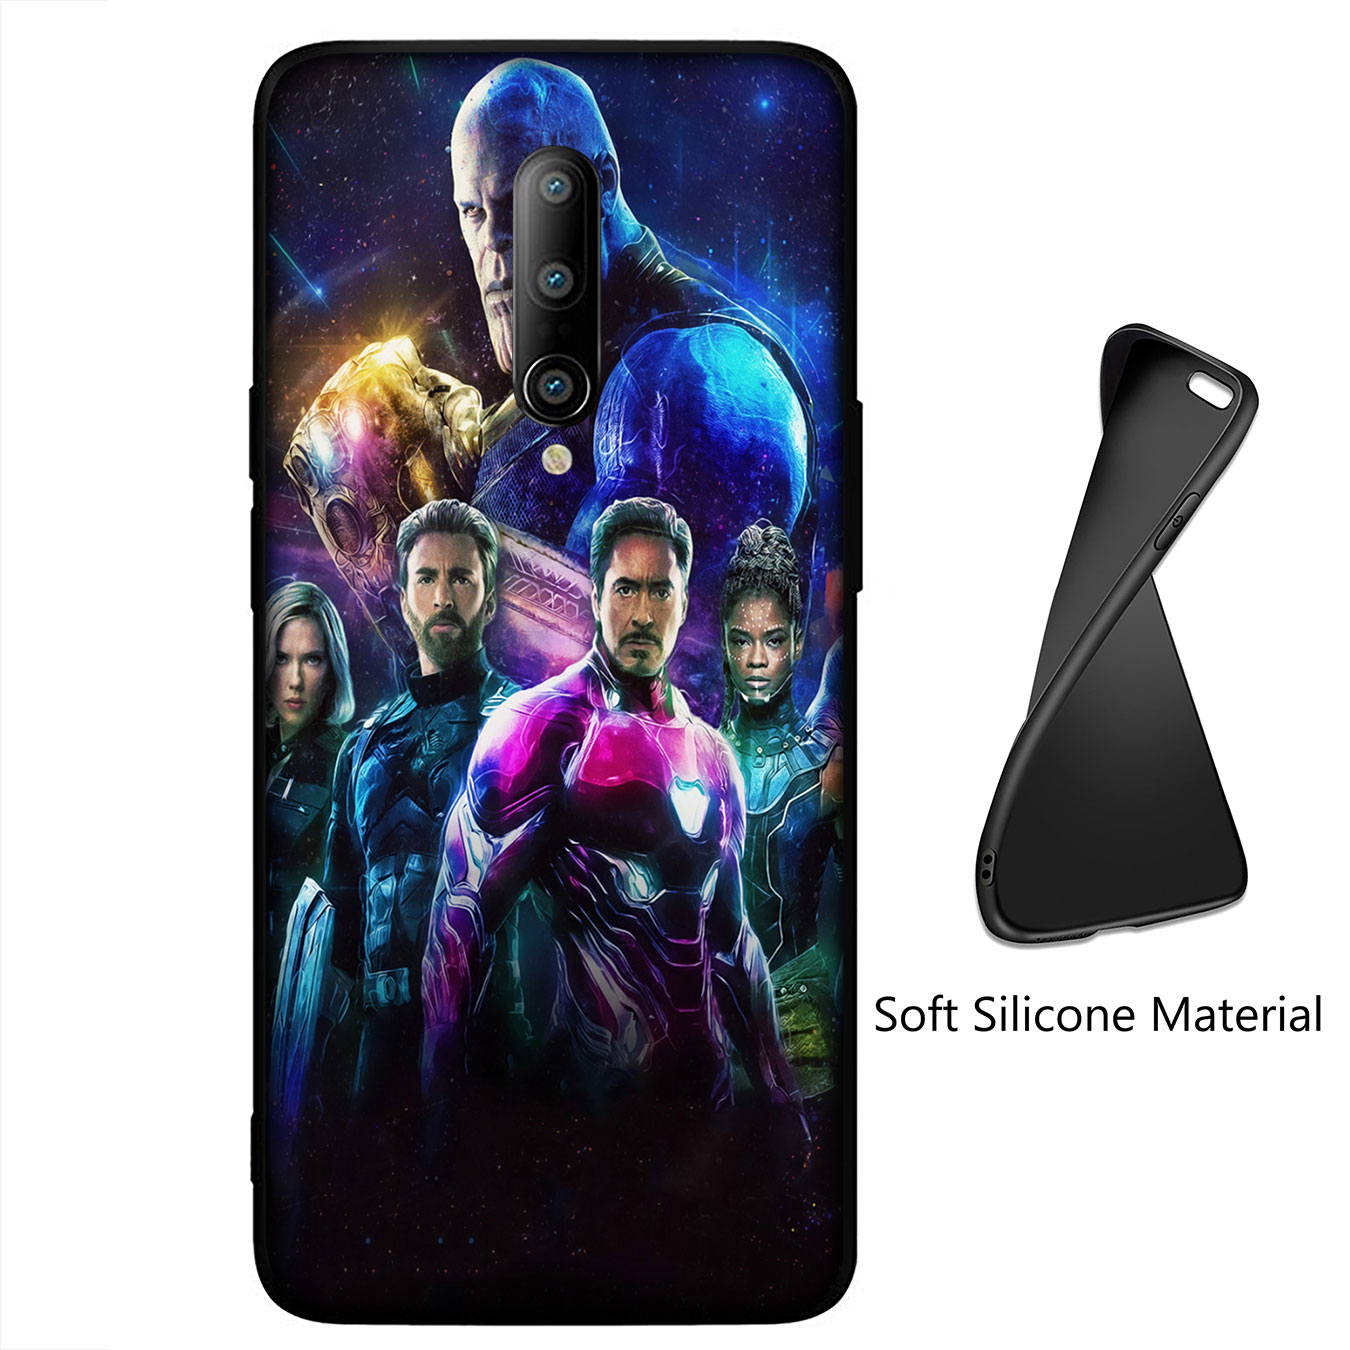 iPhone 12 Mini 11 Max Pro SE 2020 XR Phone Case Soft Silicone Casing Thanos vs avengers Marvel